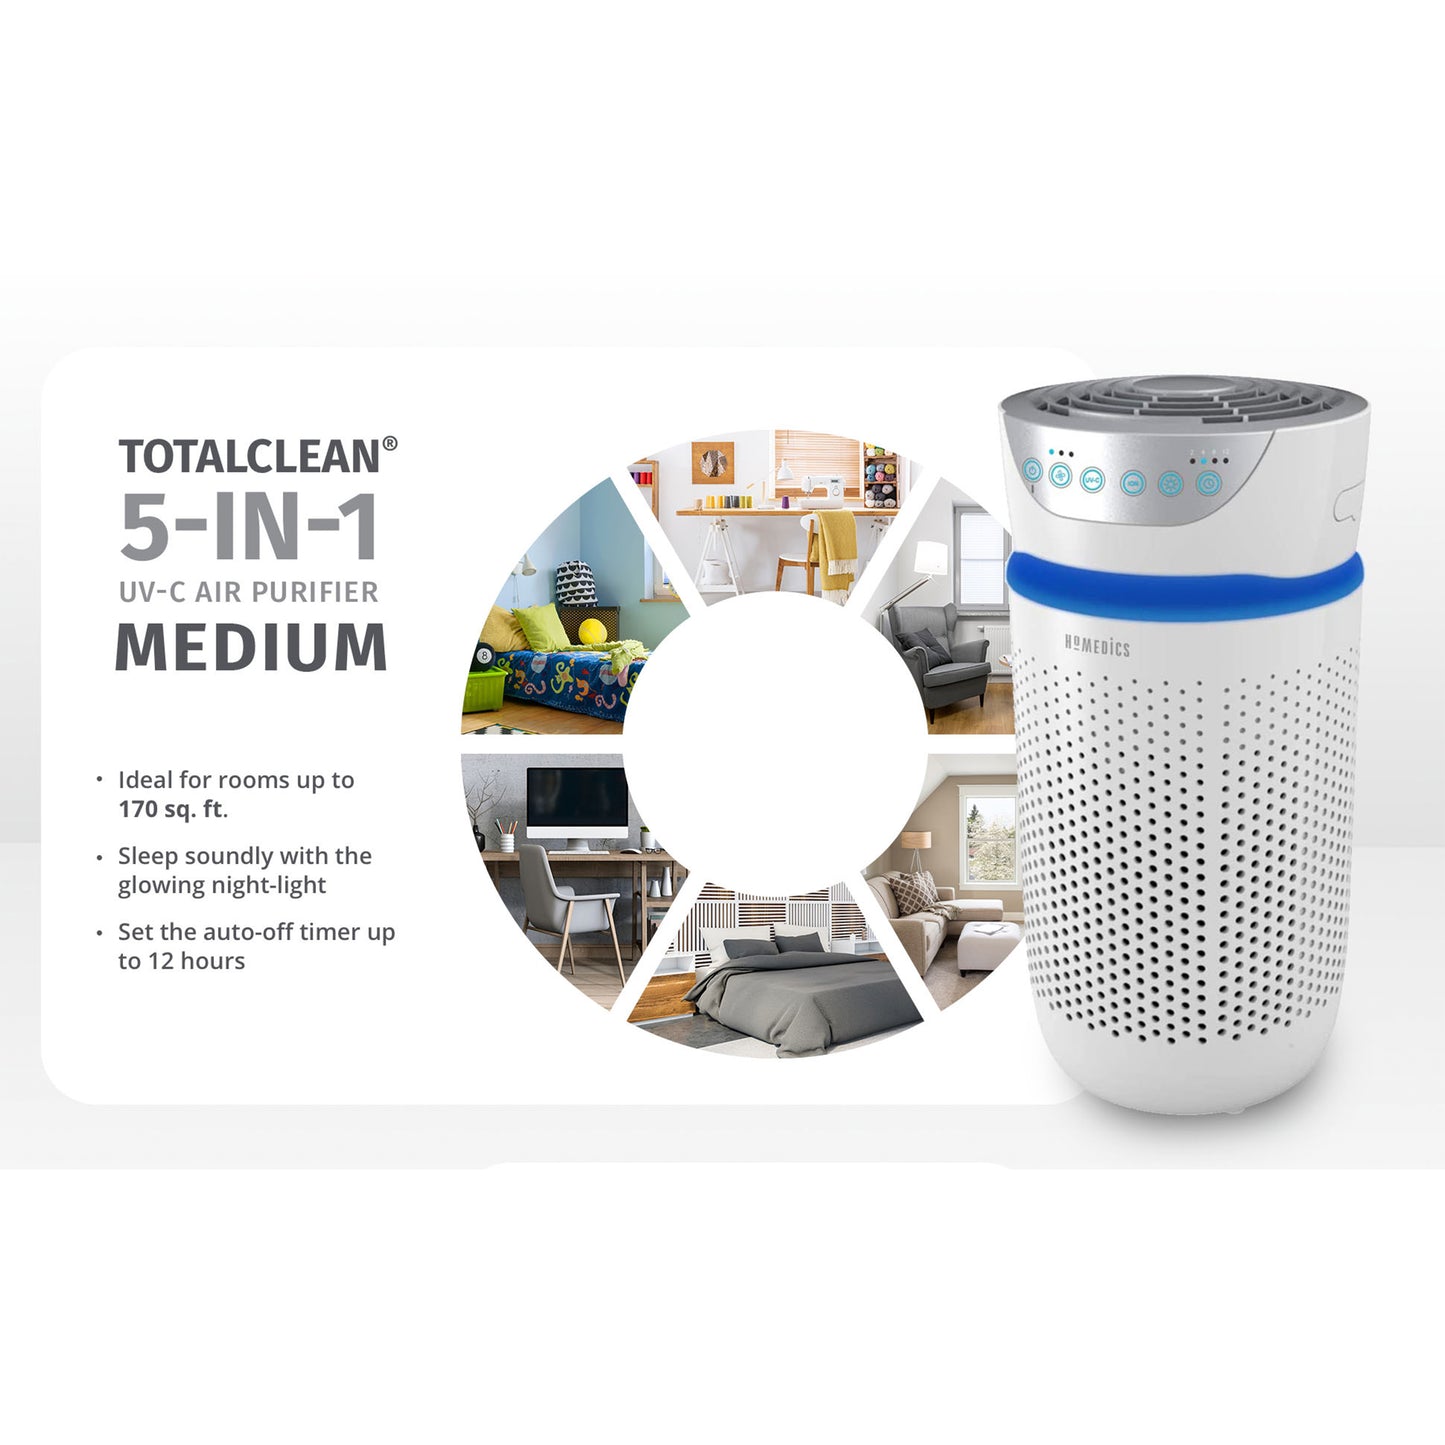 Homedics TotalClean 5-in-1 Tower Air Purifier